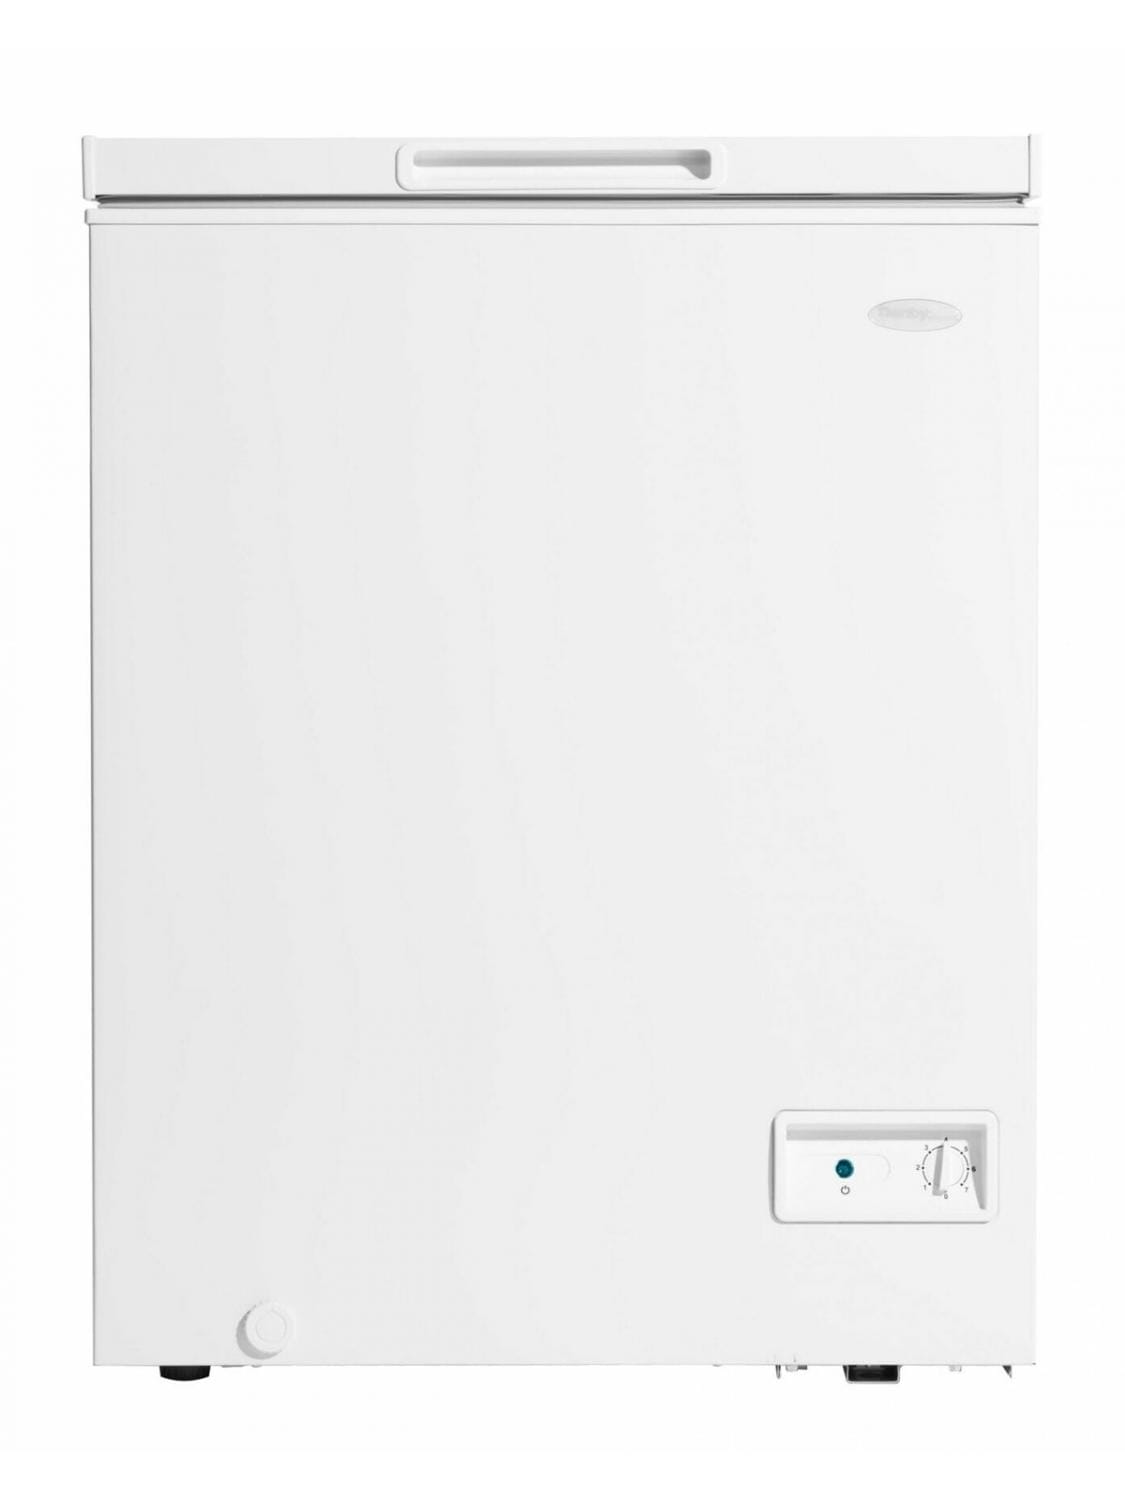 Danby - 5 cu. Ft  Chest Freezer in White - DCF050A6WM